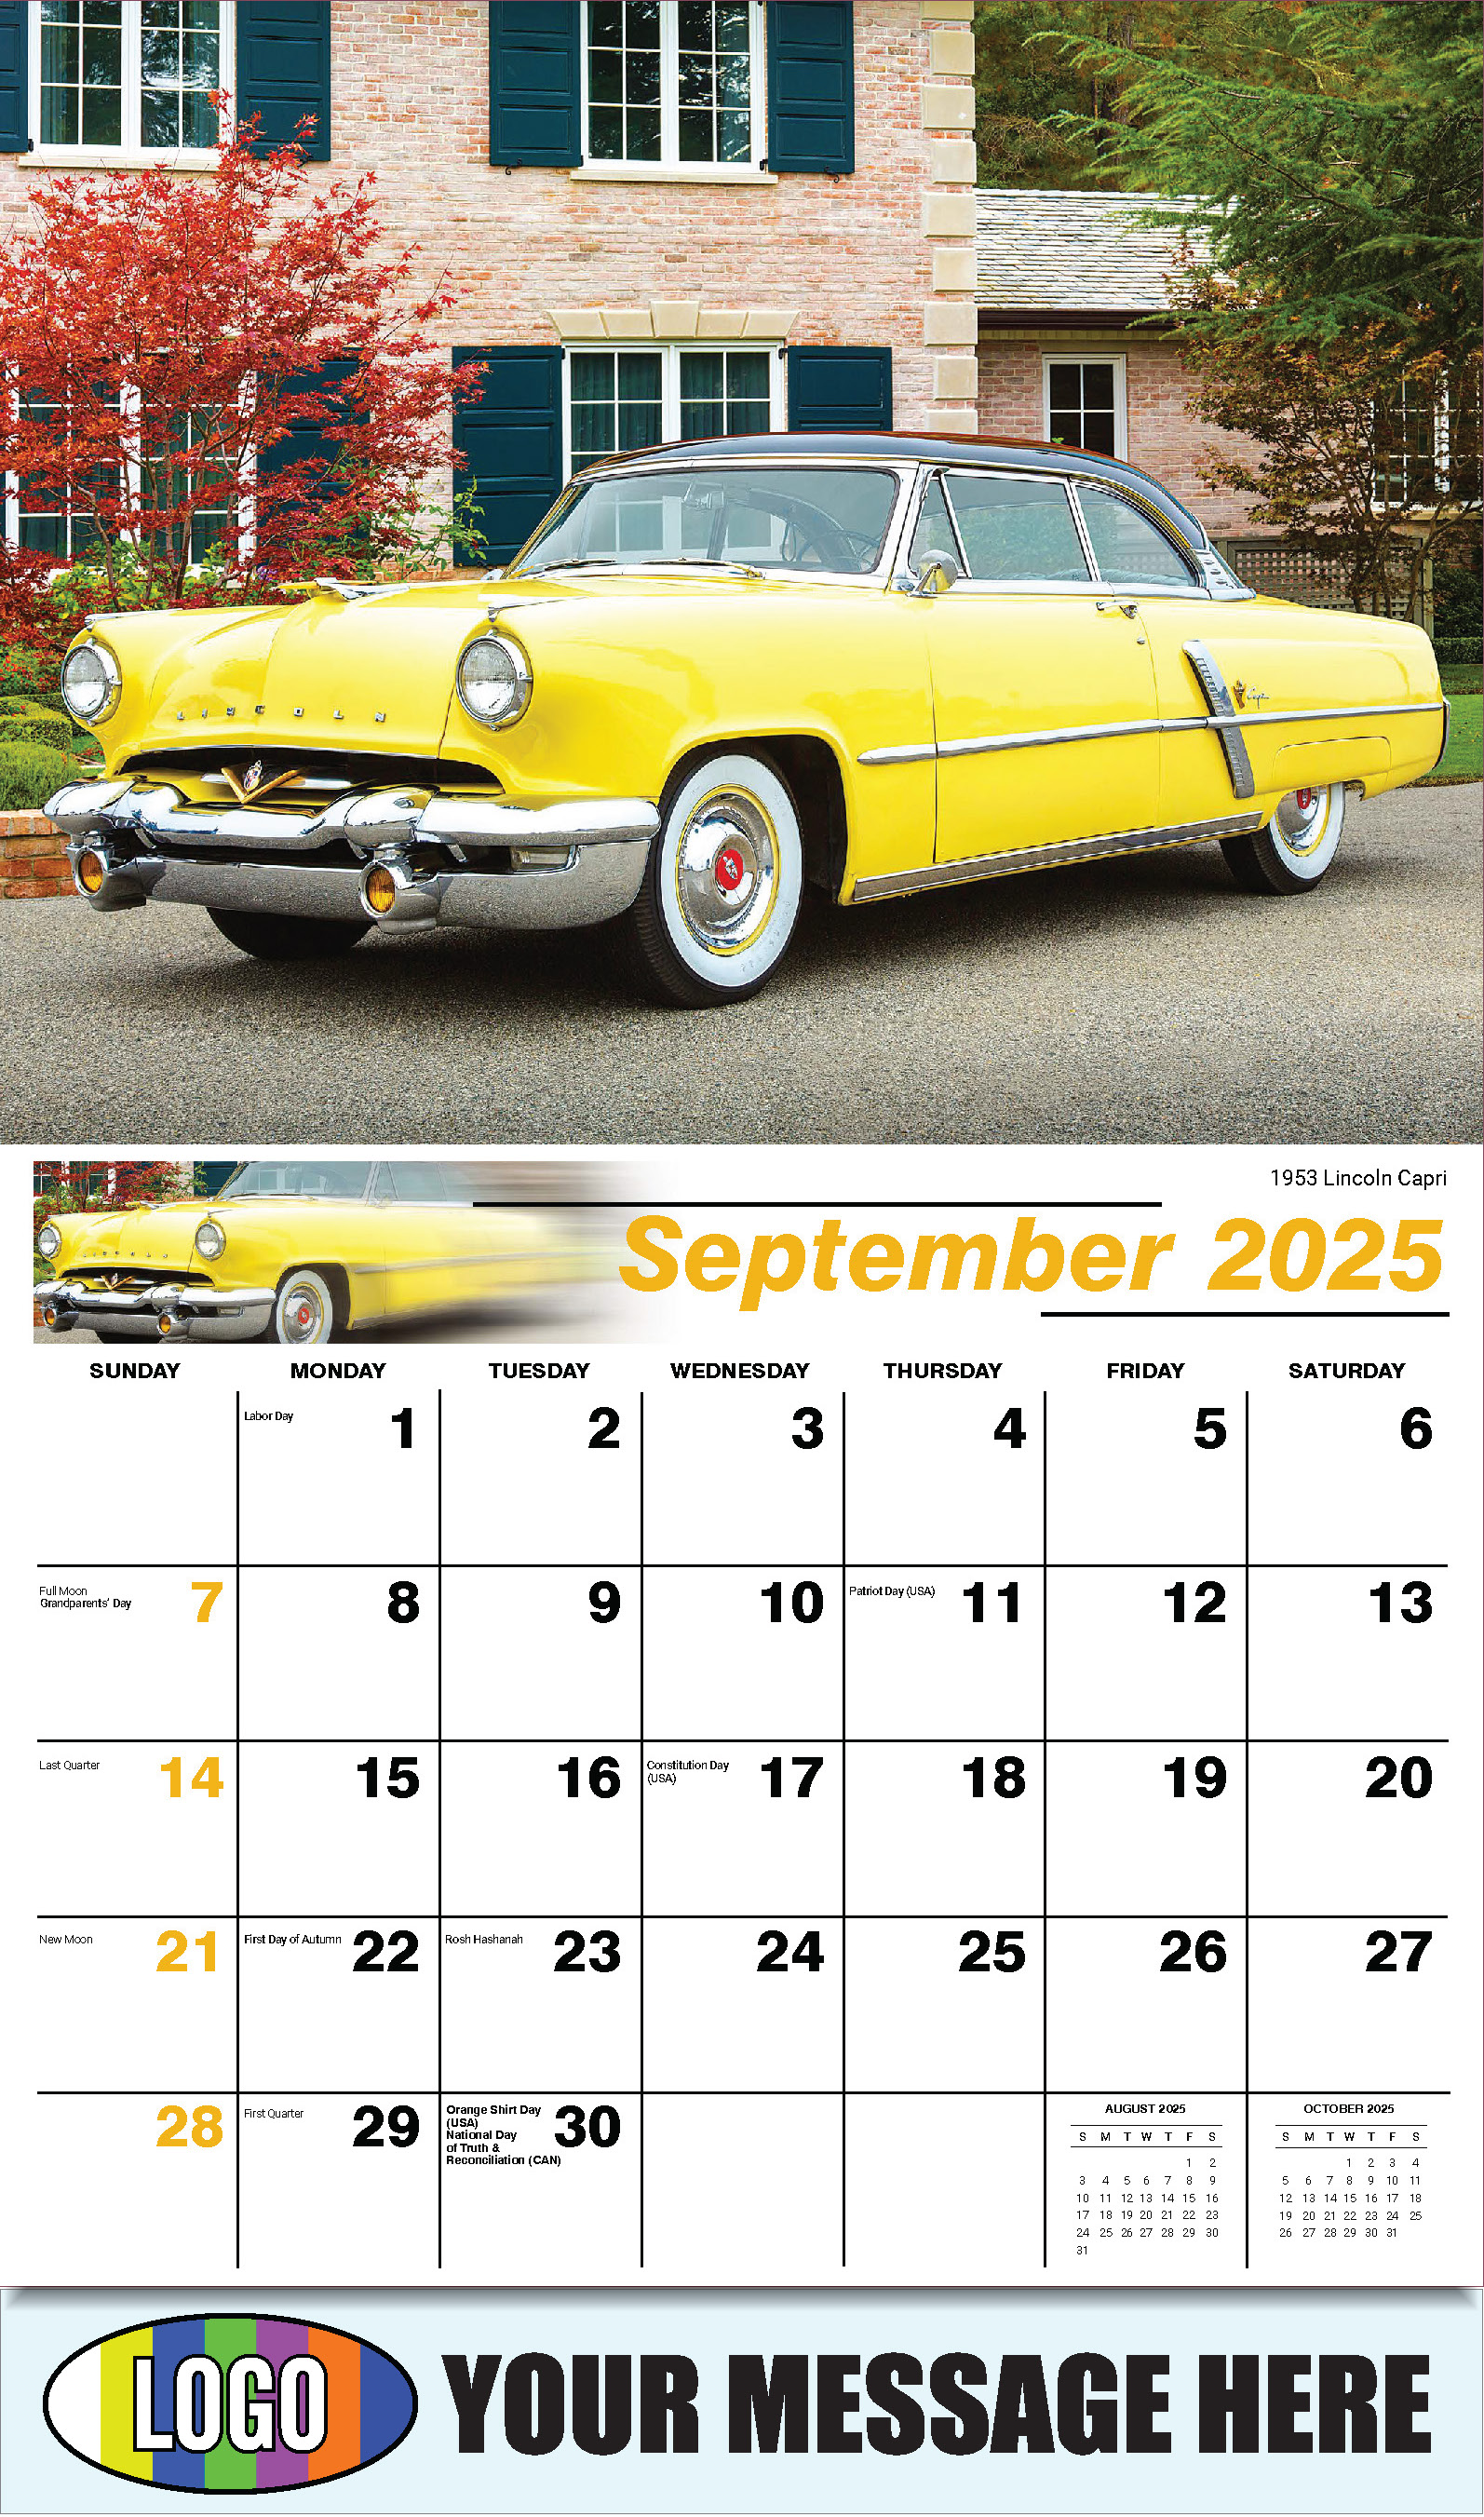 Henry's Heritage FORD Cars 2025 Automotive Business Promo Calendar - September